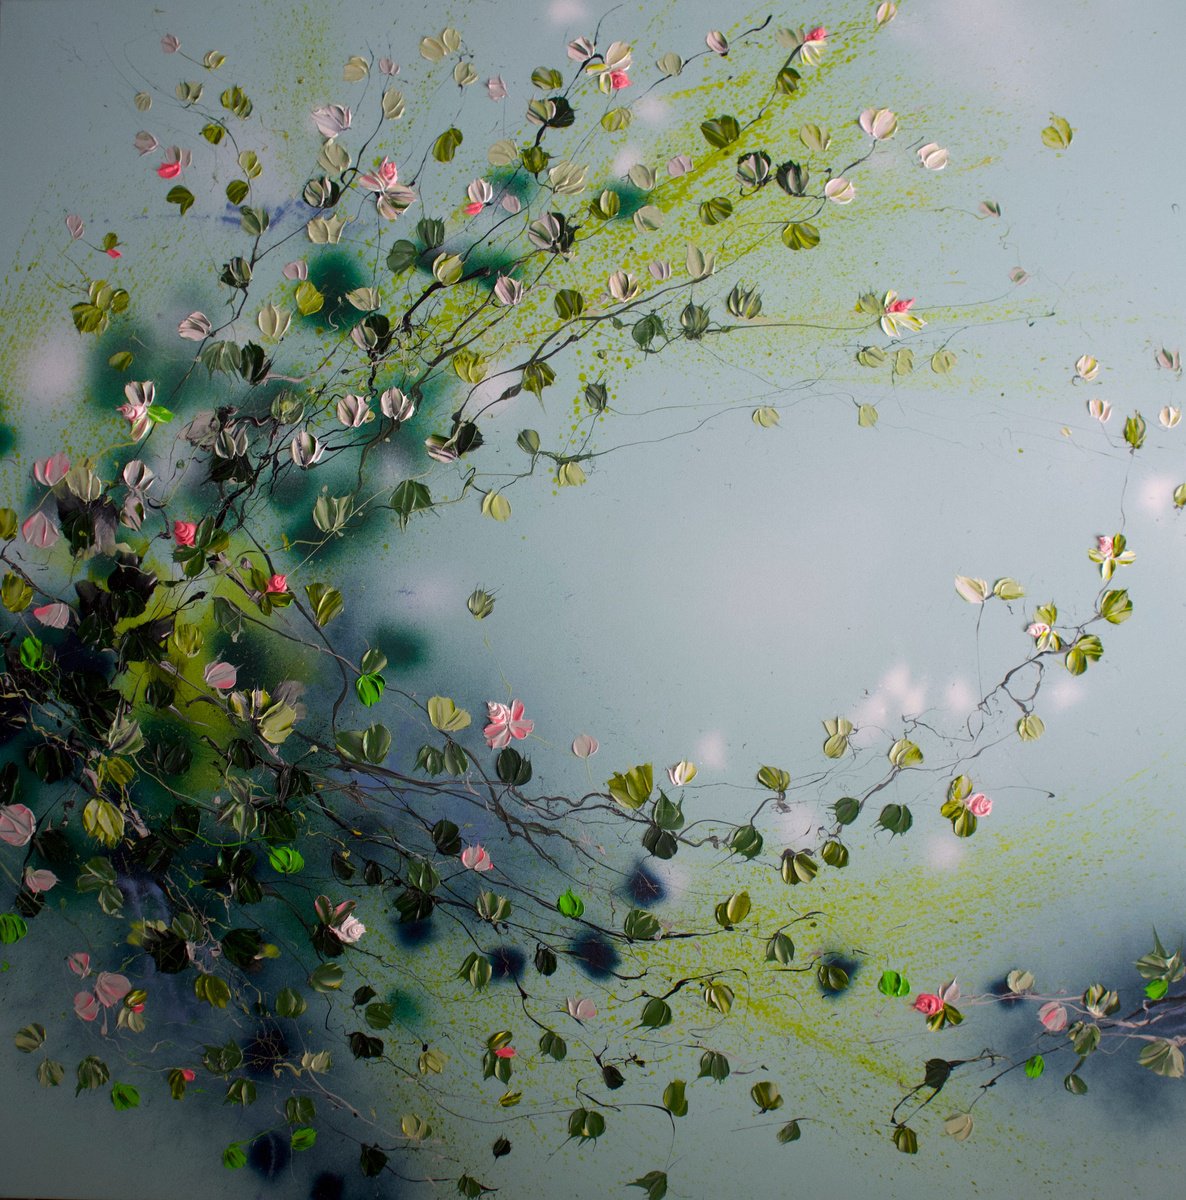 Quiet Garden II textured floral artwork by Anastassia Skopp